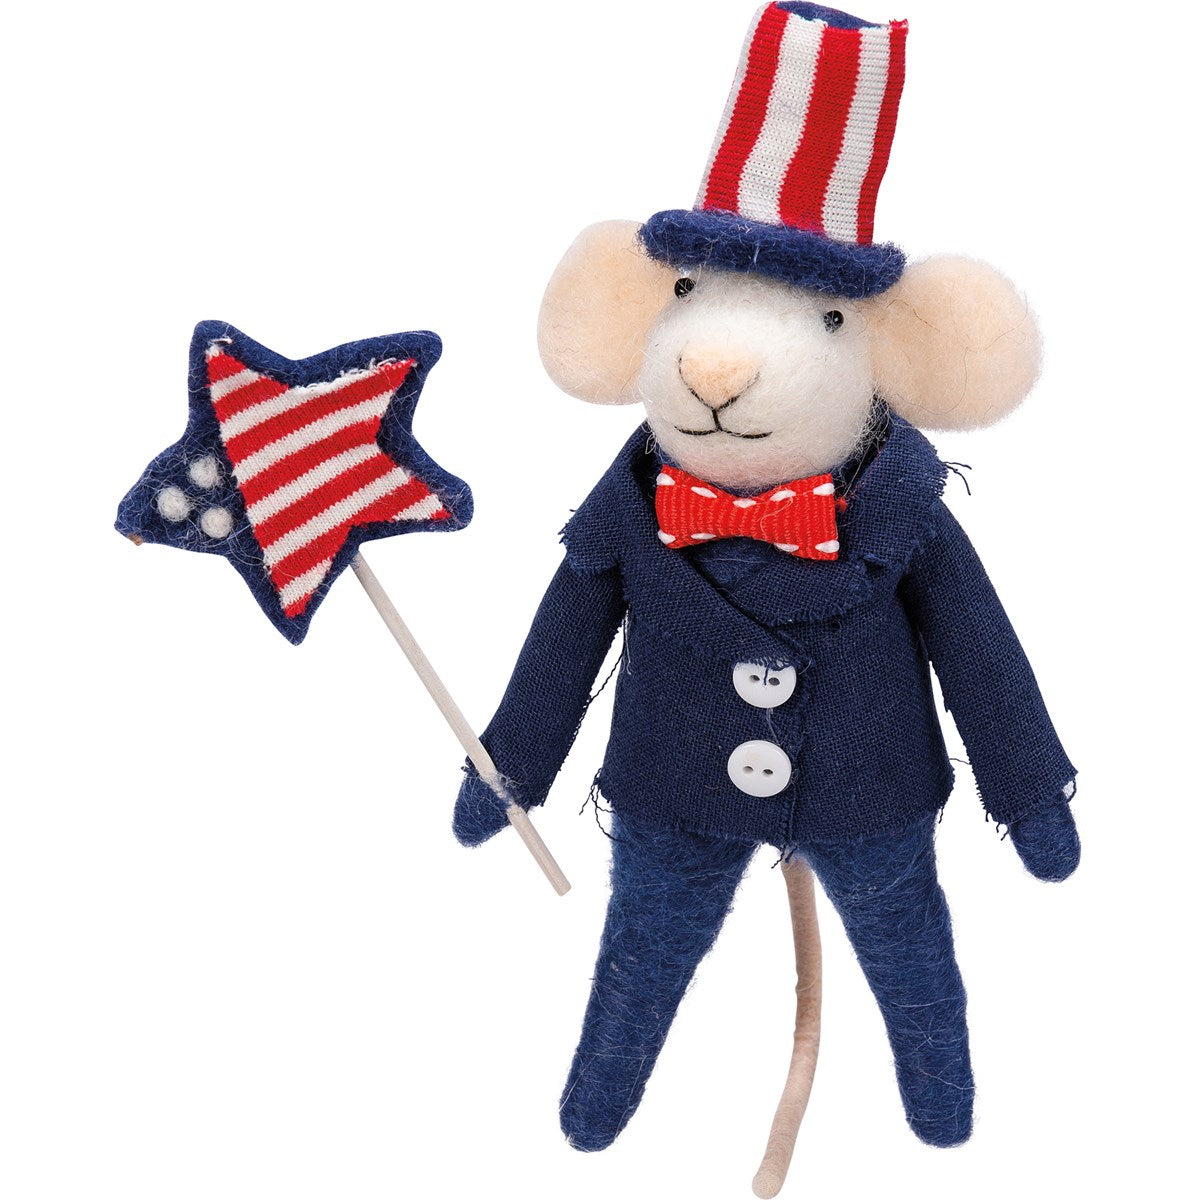 Primitive Patriotic Felt Mouse Uncle Sam Felt Ornament with Flag Star